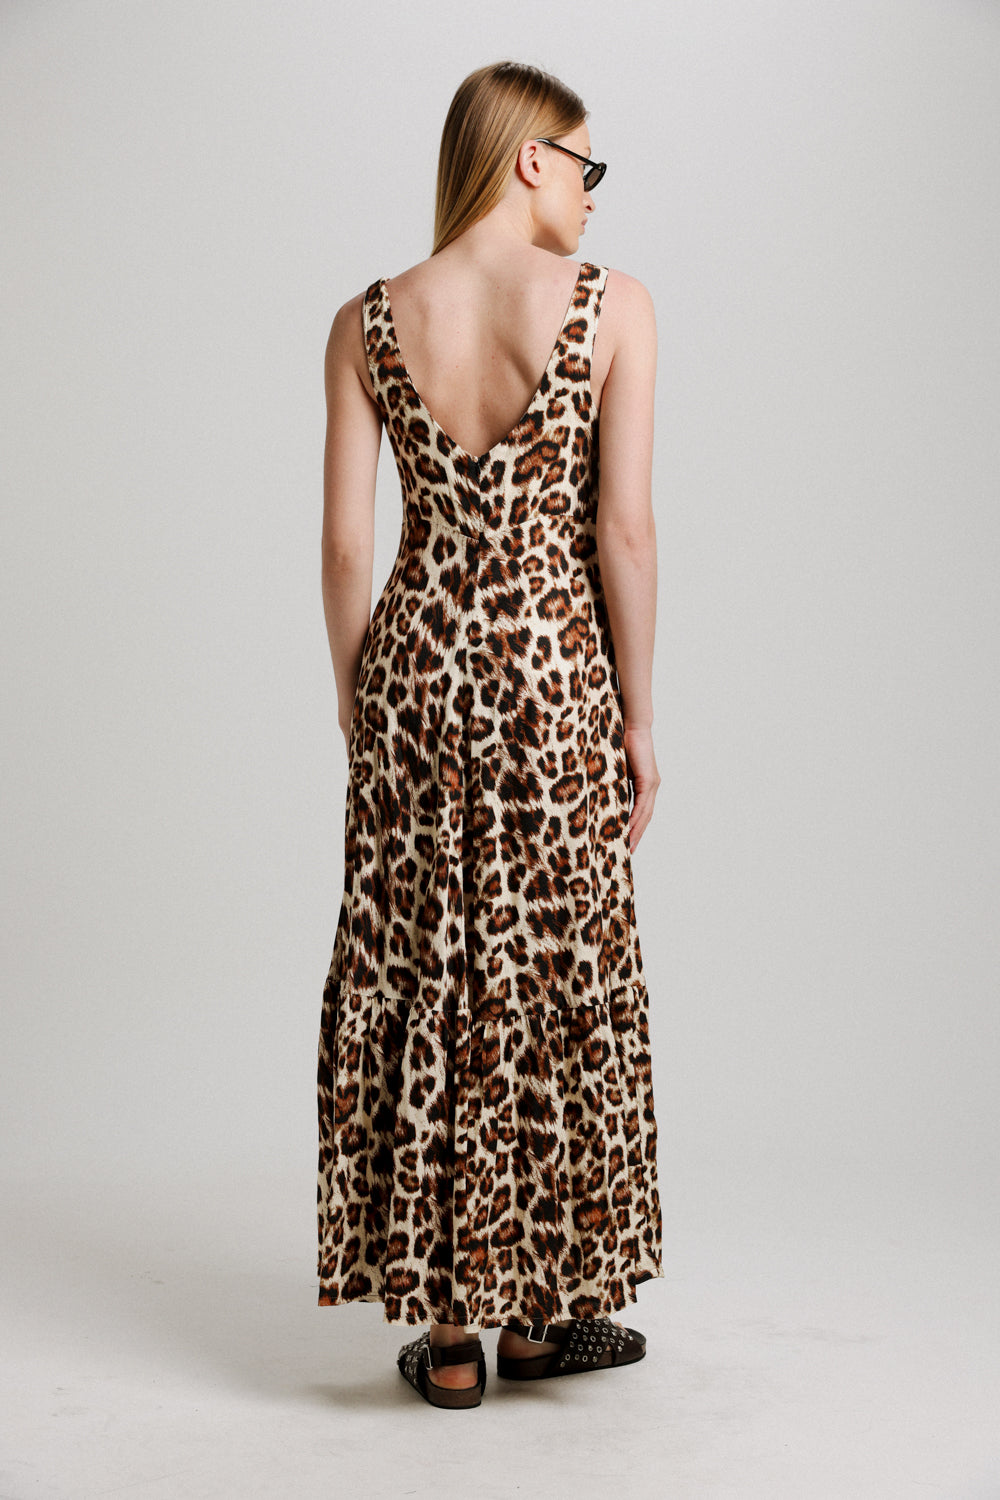 Target Leopard Viscose Dress